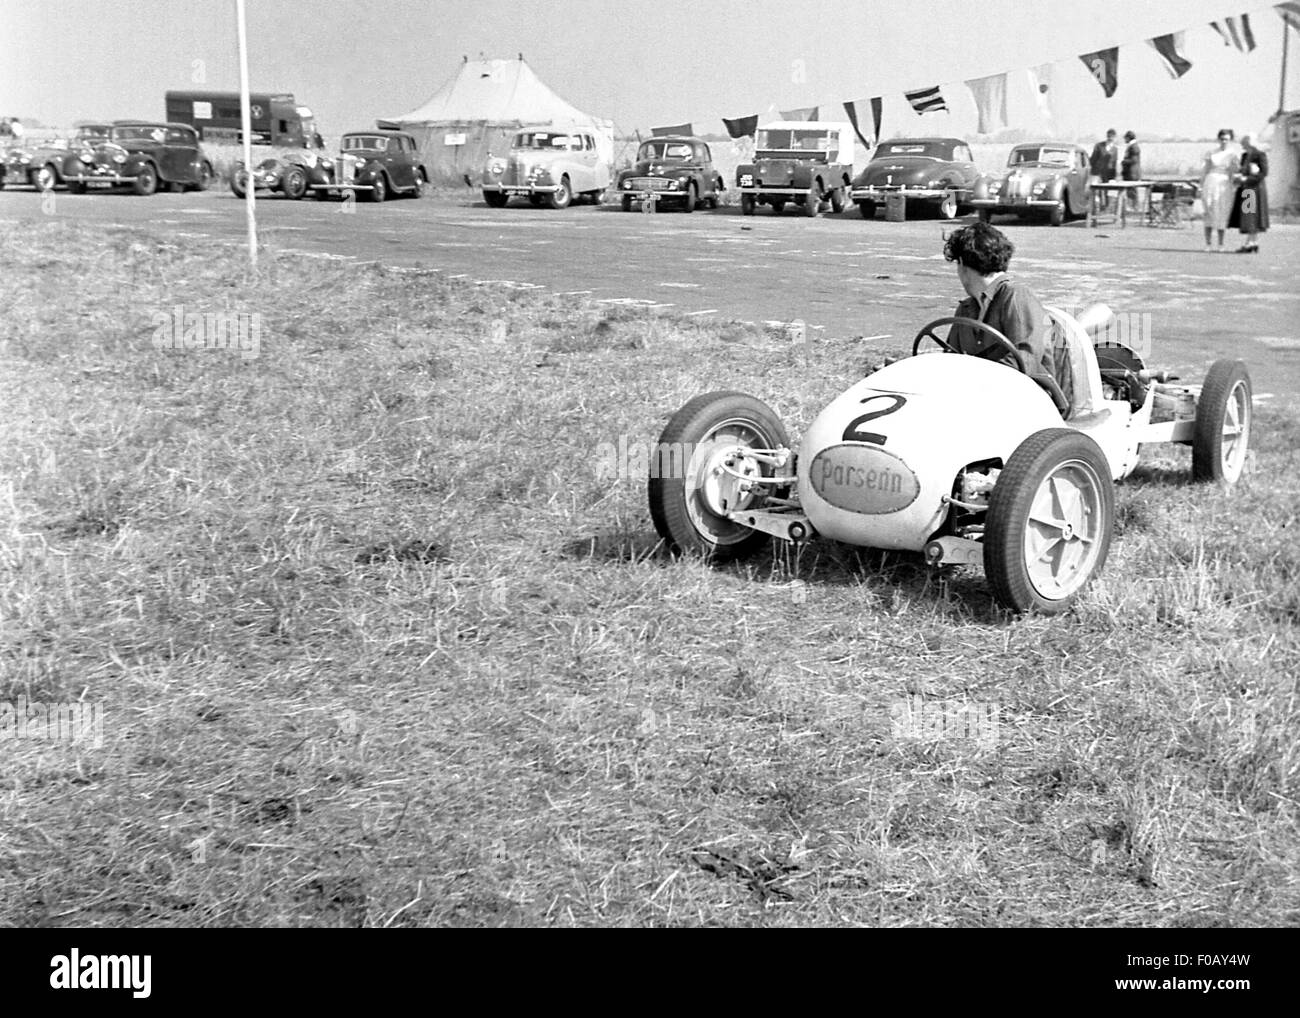 Parsenn 500 racing car 1950s Stock Photo